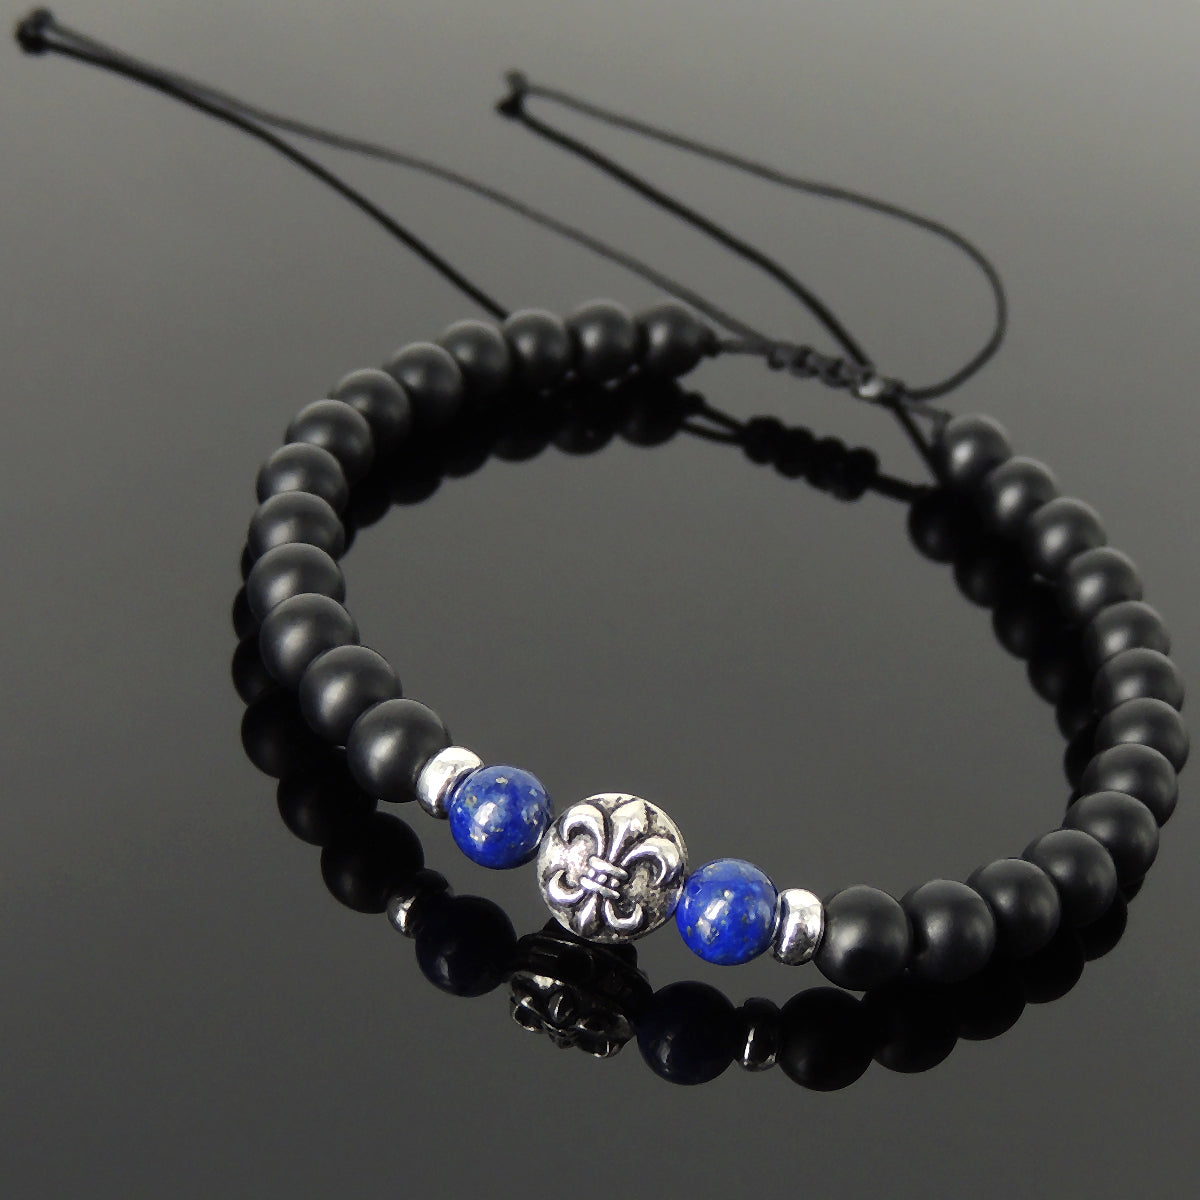 6mm Lapis Lazuli & Matte Black Onyx Adjustable Braided Bracelet with S925 Sterling Silver Fleur de Lis Bead - Handmade by Gem & Silver BR1333